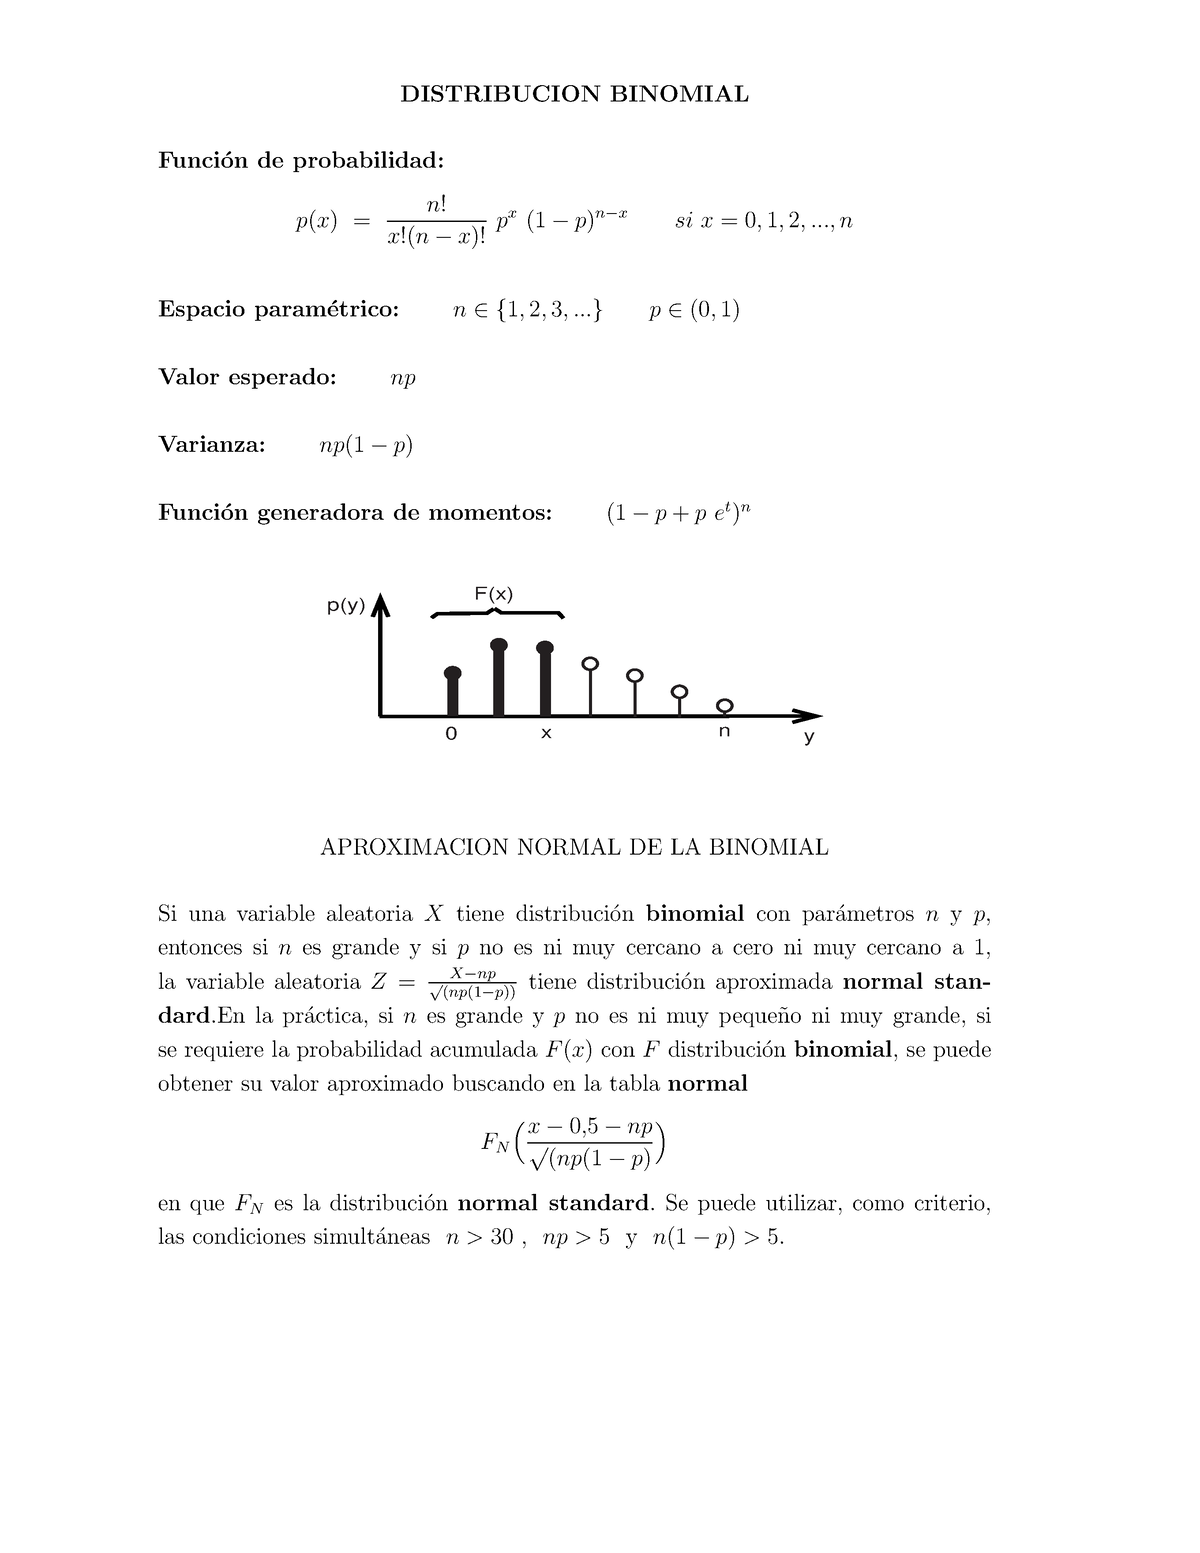 Tabla Binomial Distribucion Binomial Funci On De Probabilidad P X N X N X Px P